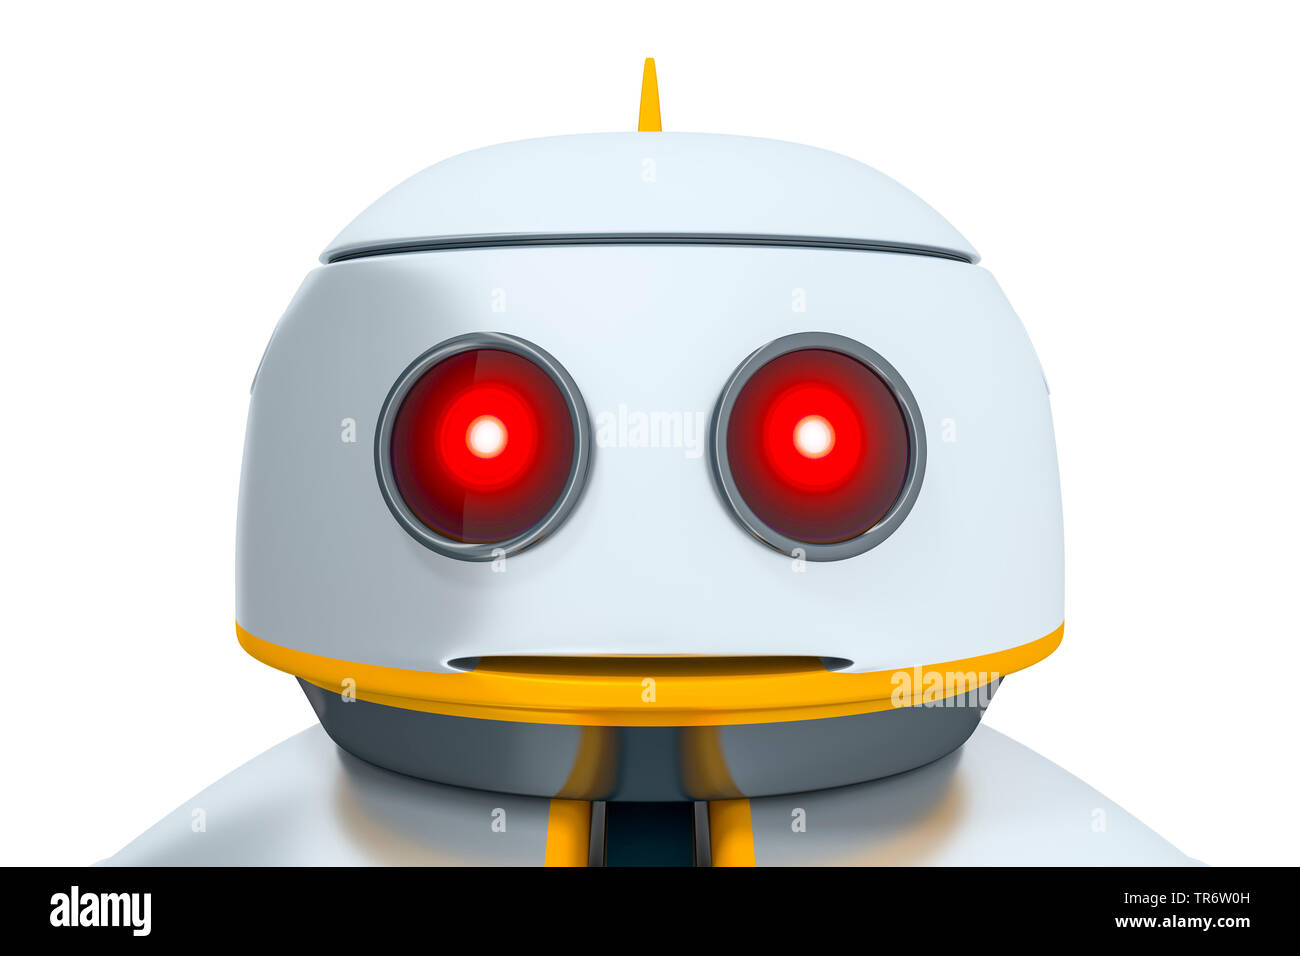 Lindo robot cara redonda con ojos rojos Fotografía de stock - Alamy